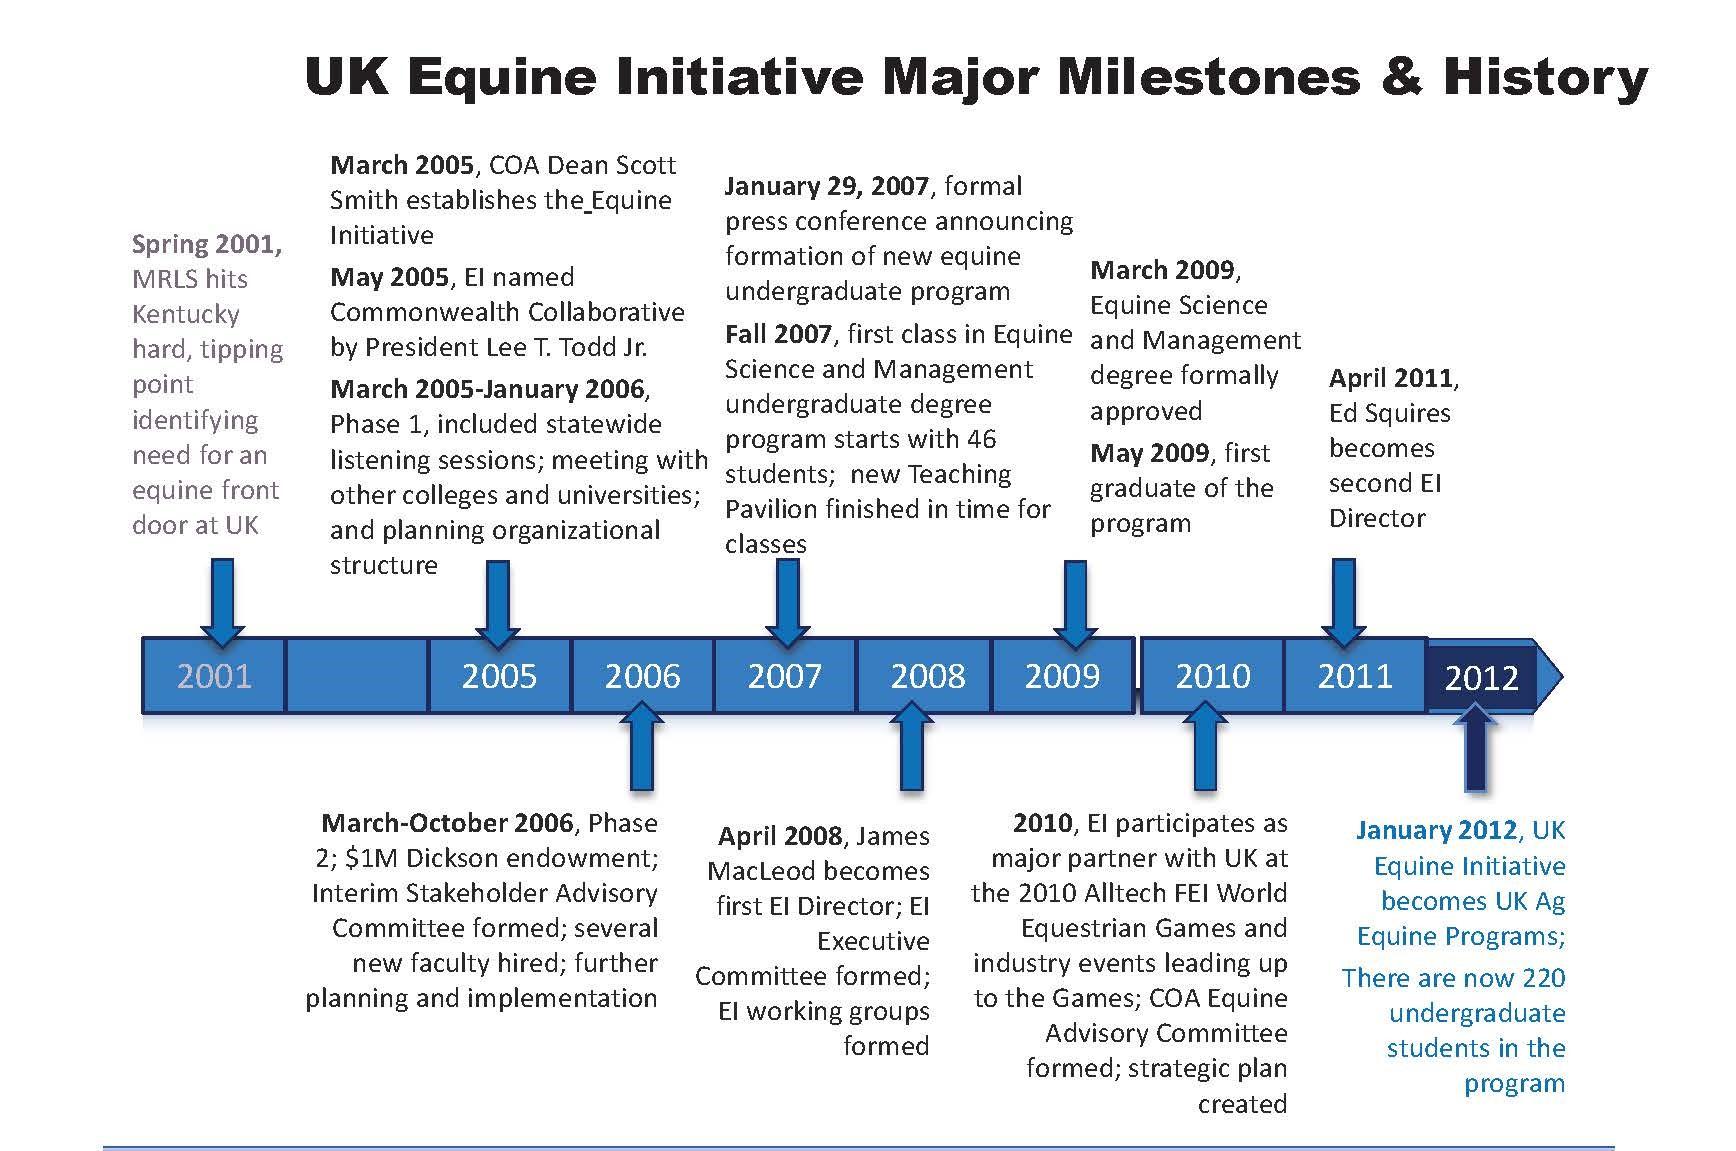 Time-based chart of UK Equine Initiatives Major Milestones & History